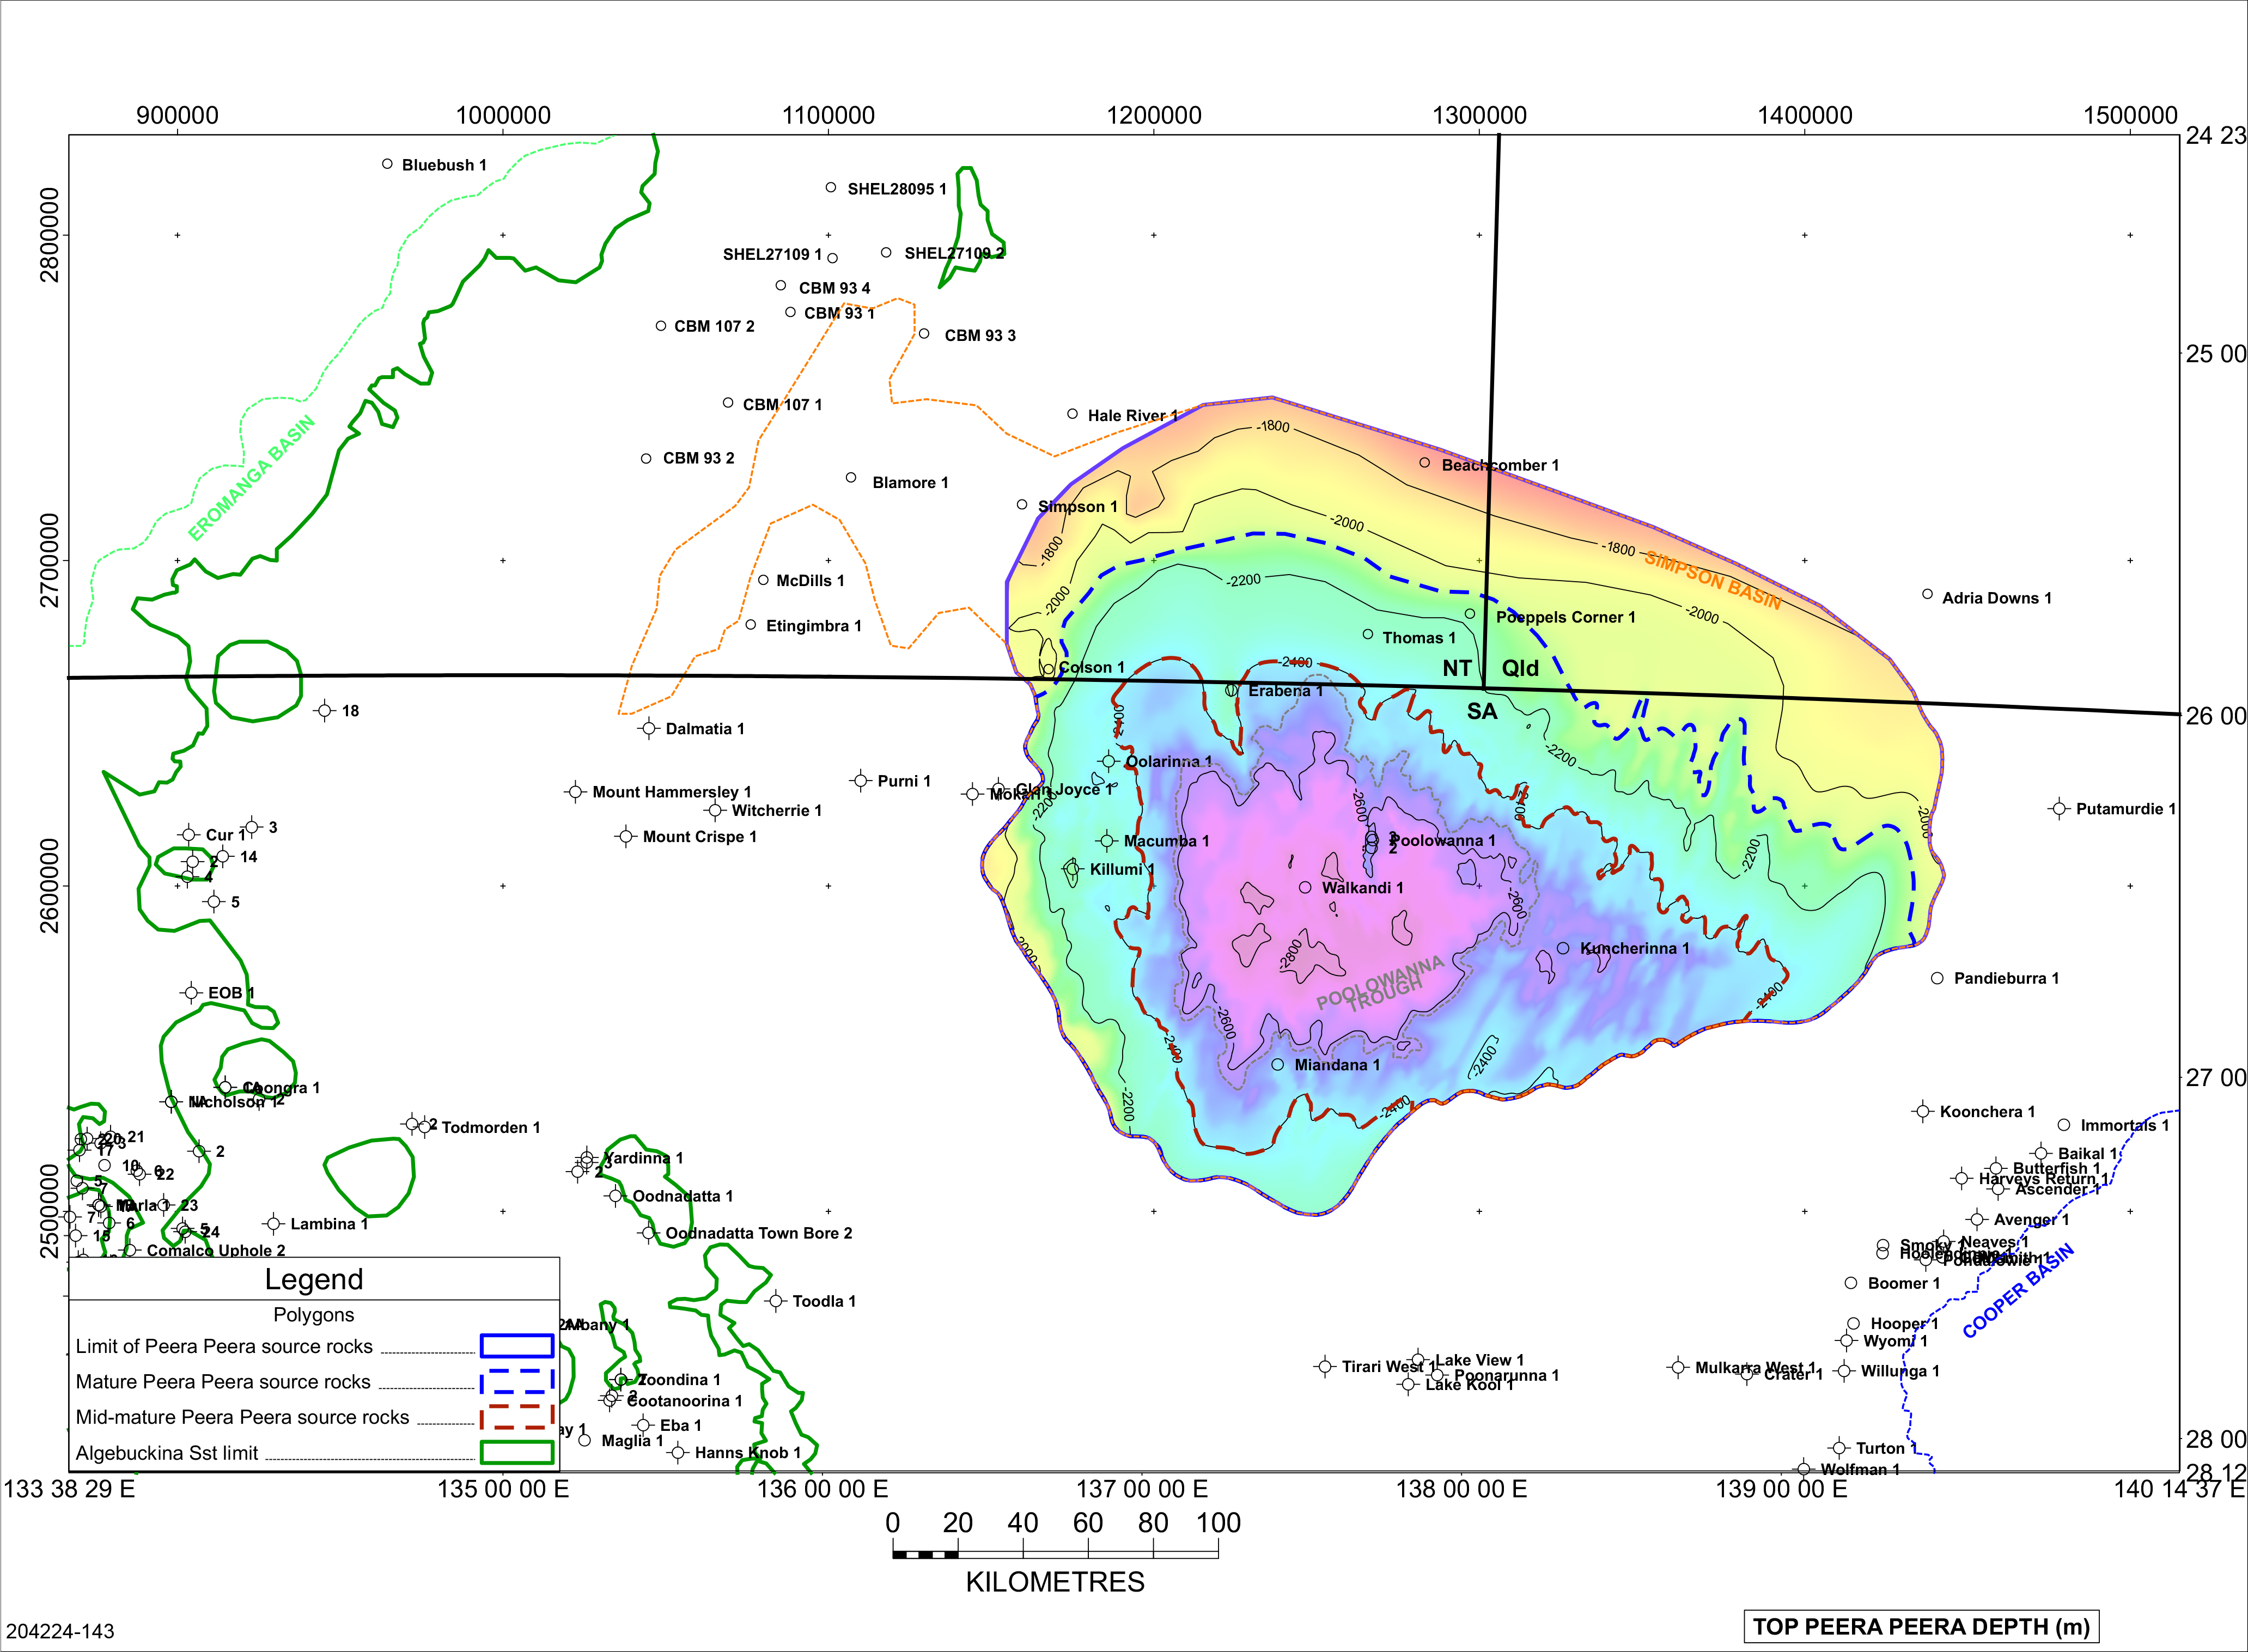 Maturity of the Peera Peera Formation source rocks in the Simpson Basin.